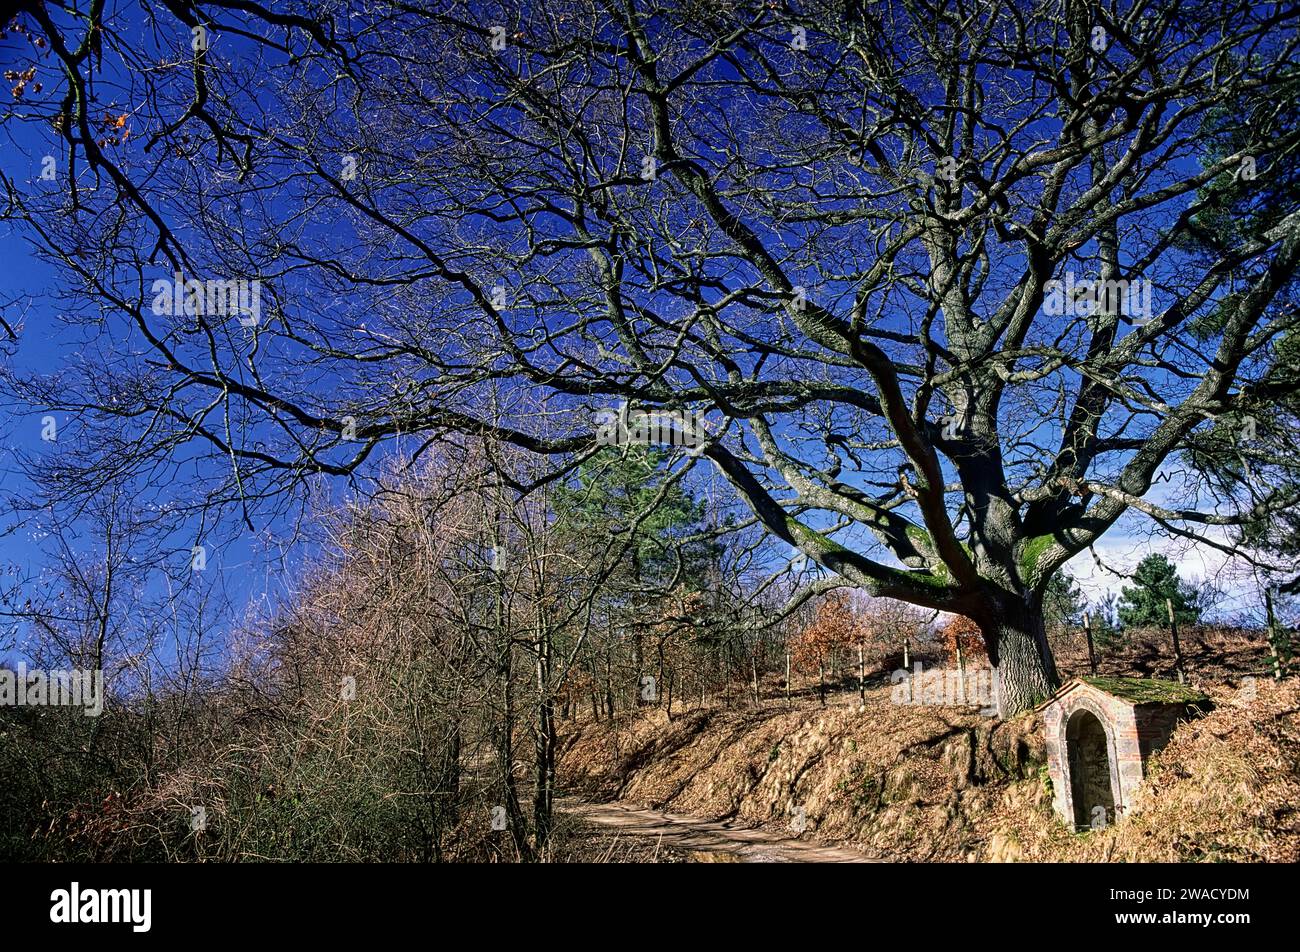 Cerro di Badia Montescalari, arbre monumental. Chêne de dinde vieux de plusieurs siècles (Quercus cerris). Greve in Chianti, Toscane, Italie. Banque D'Images